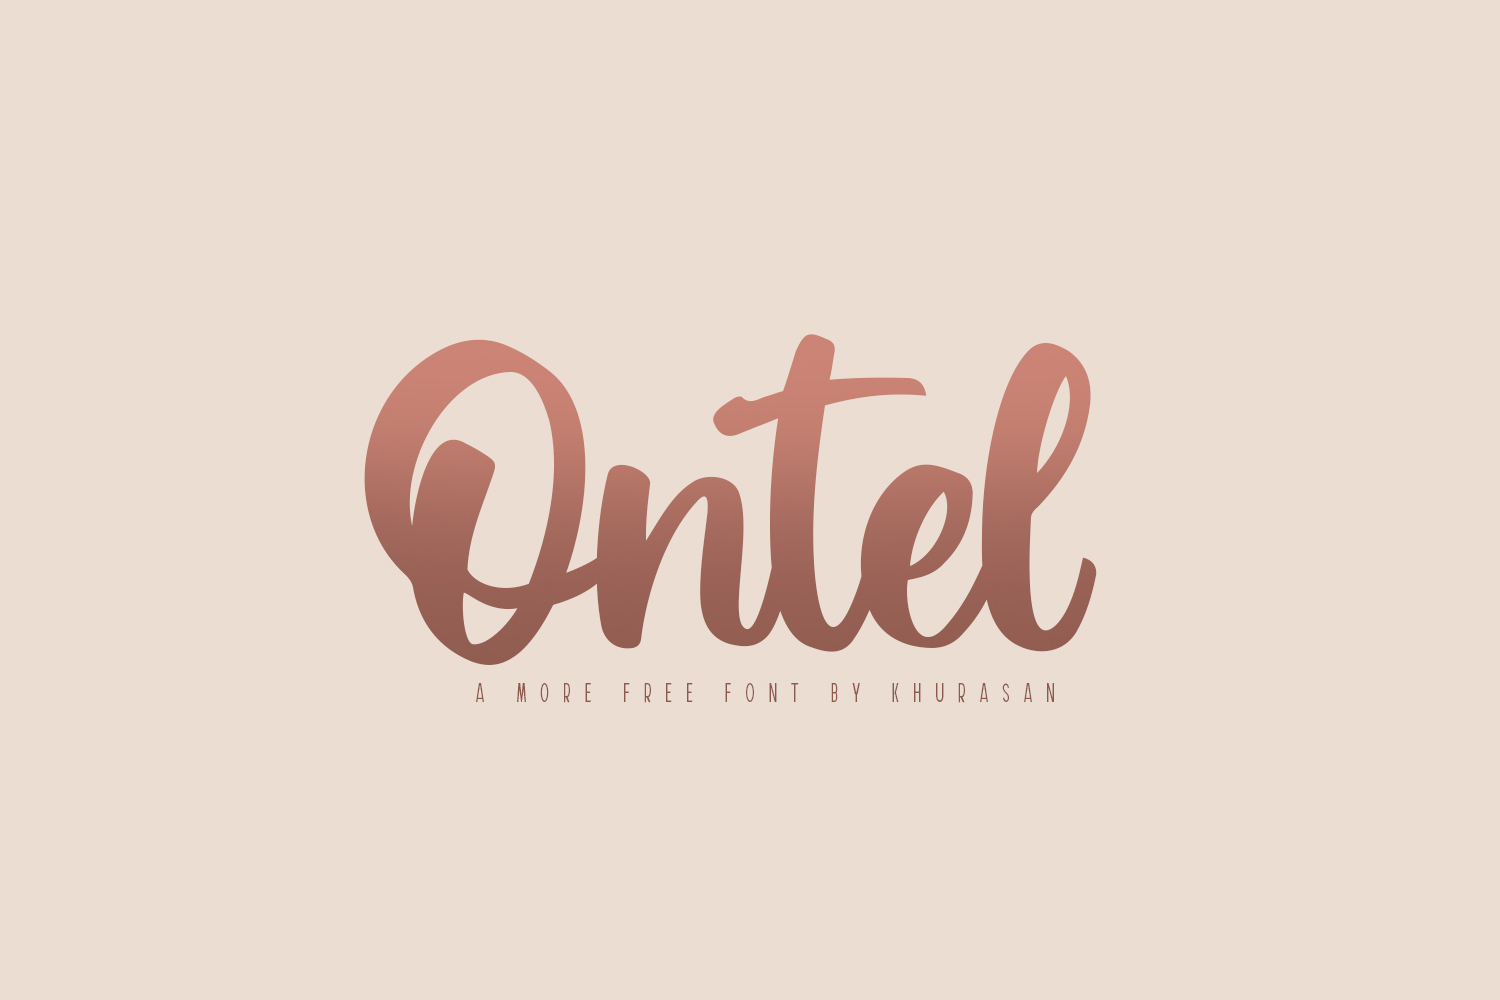 Ontel Script Free Font